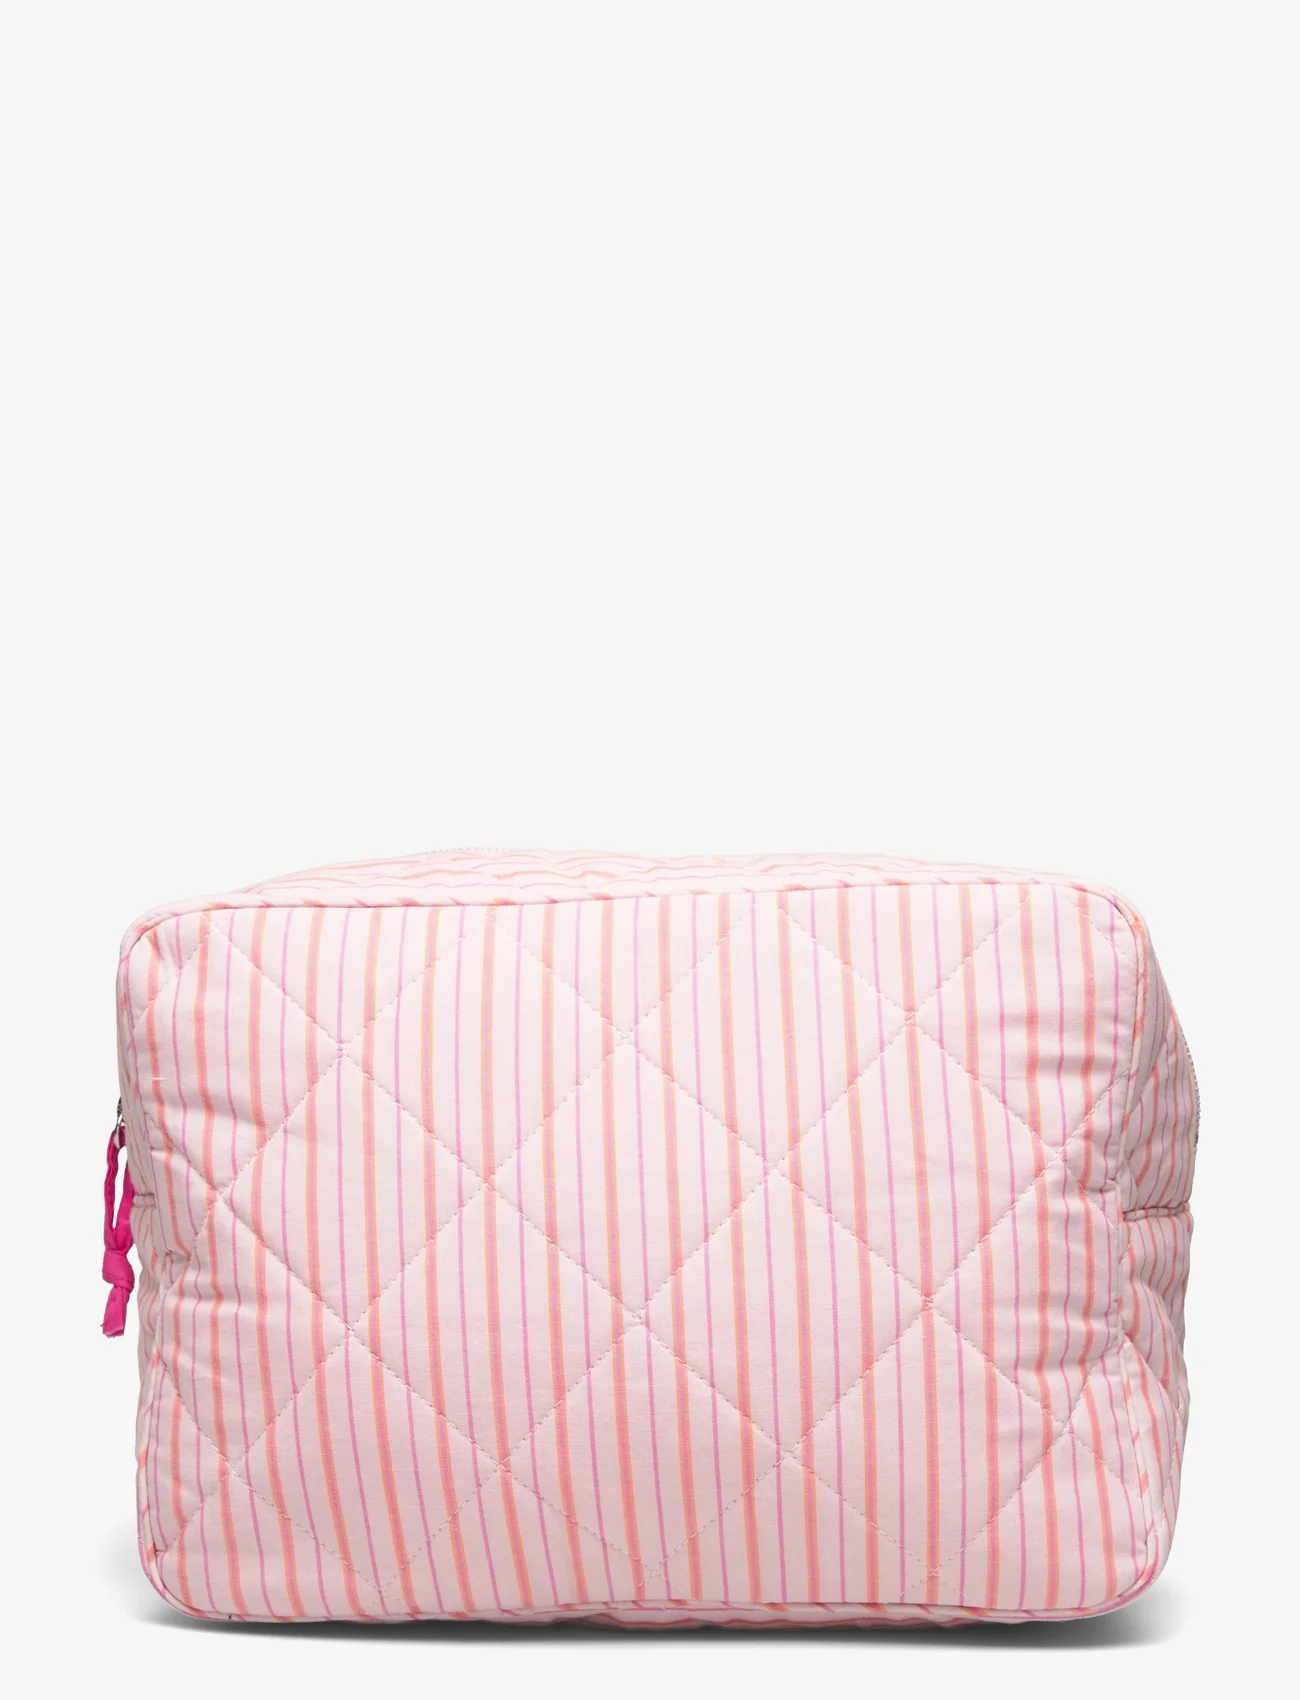 Becksöndergaard - Stripel Malin Bag - geburtstagsgeschenke - peach whip pink - 0